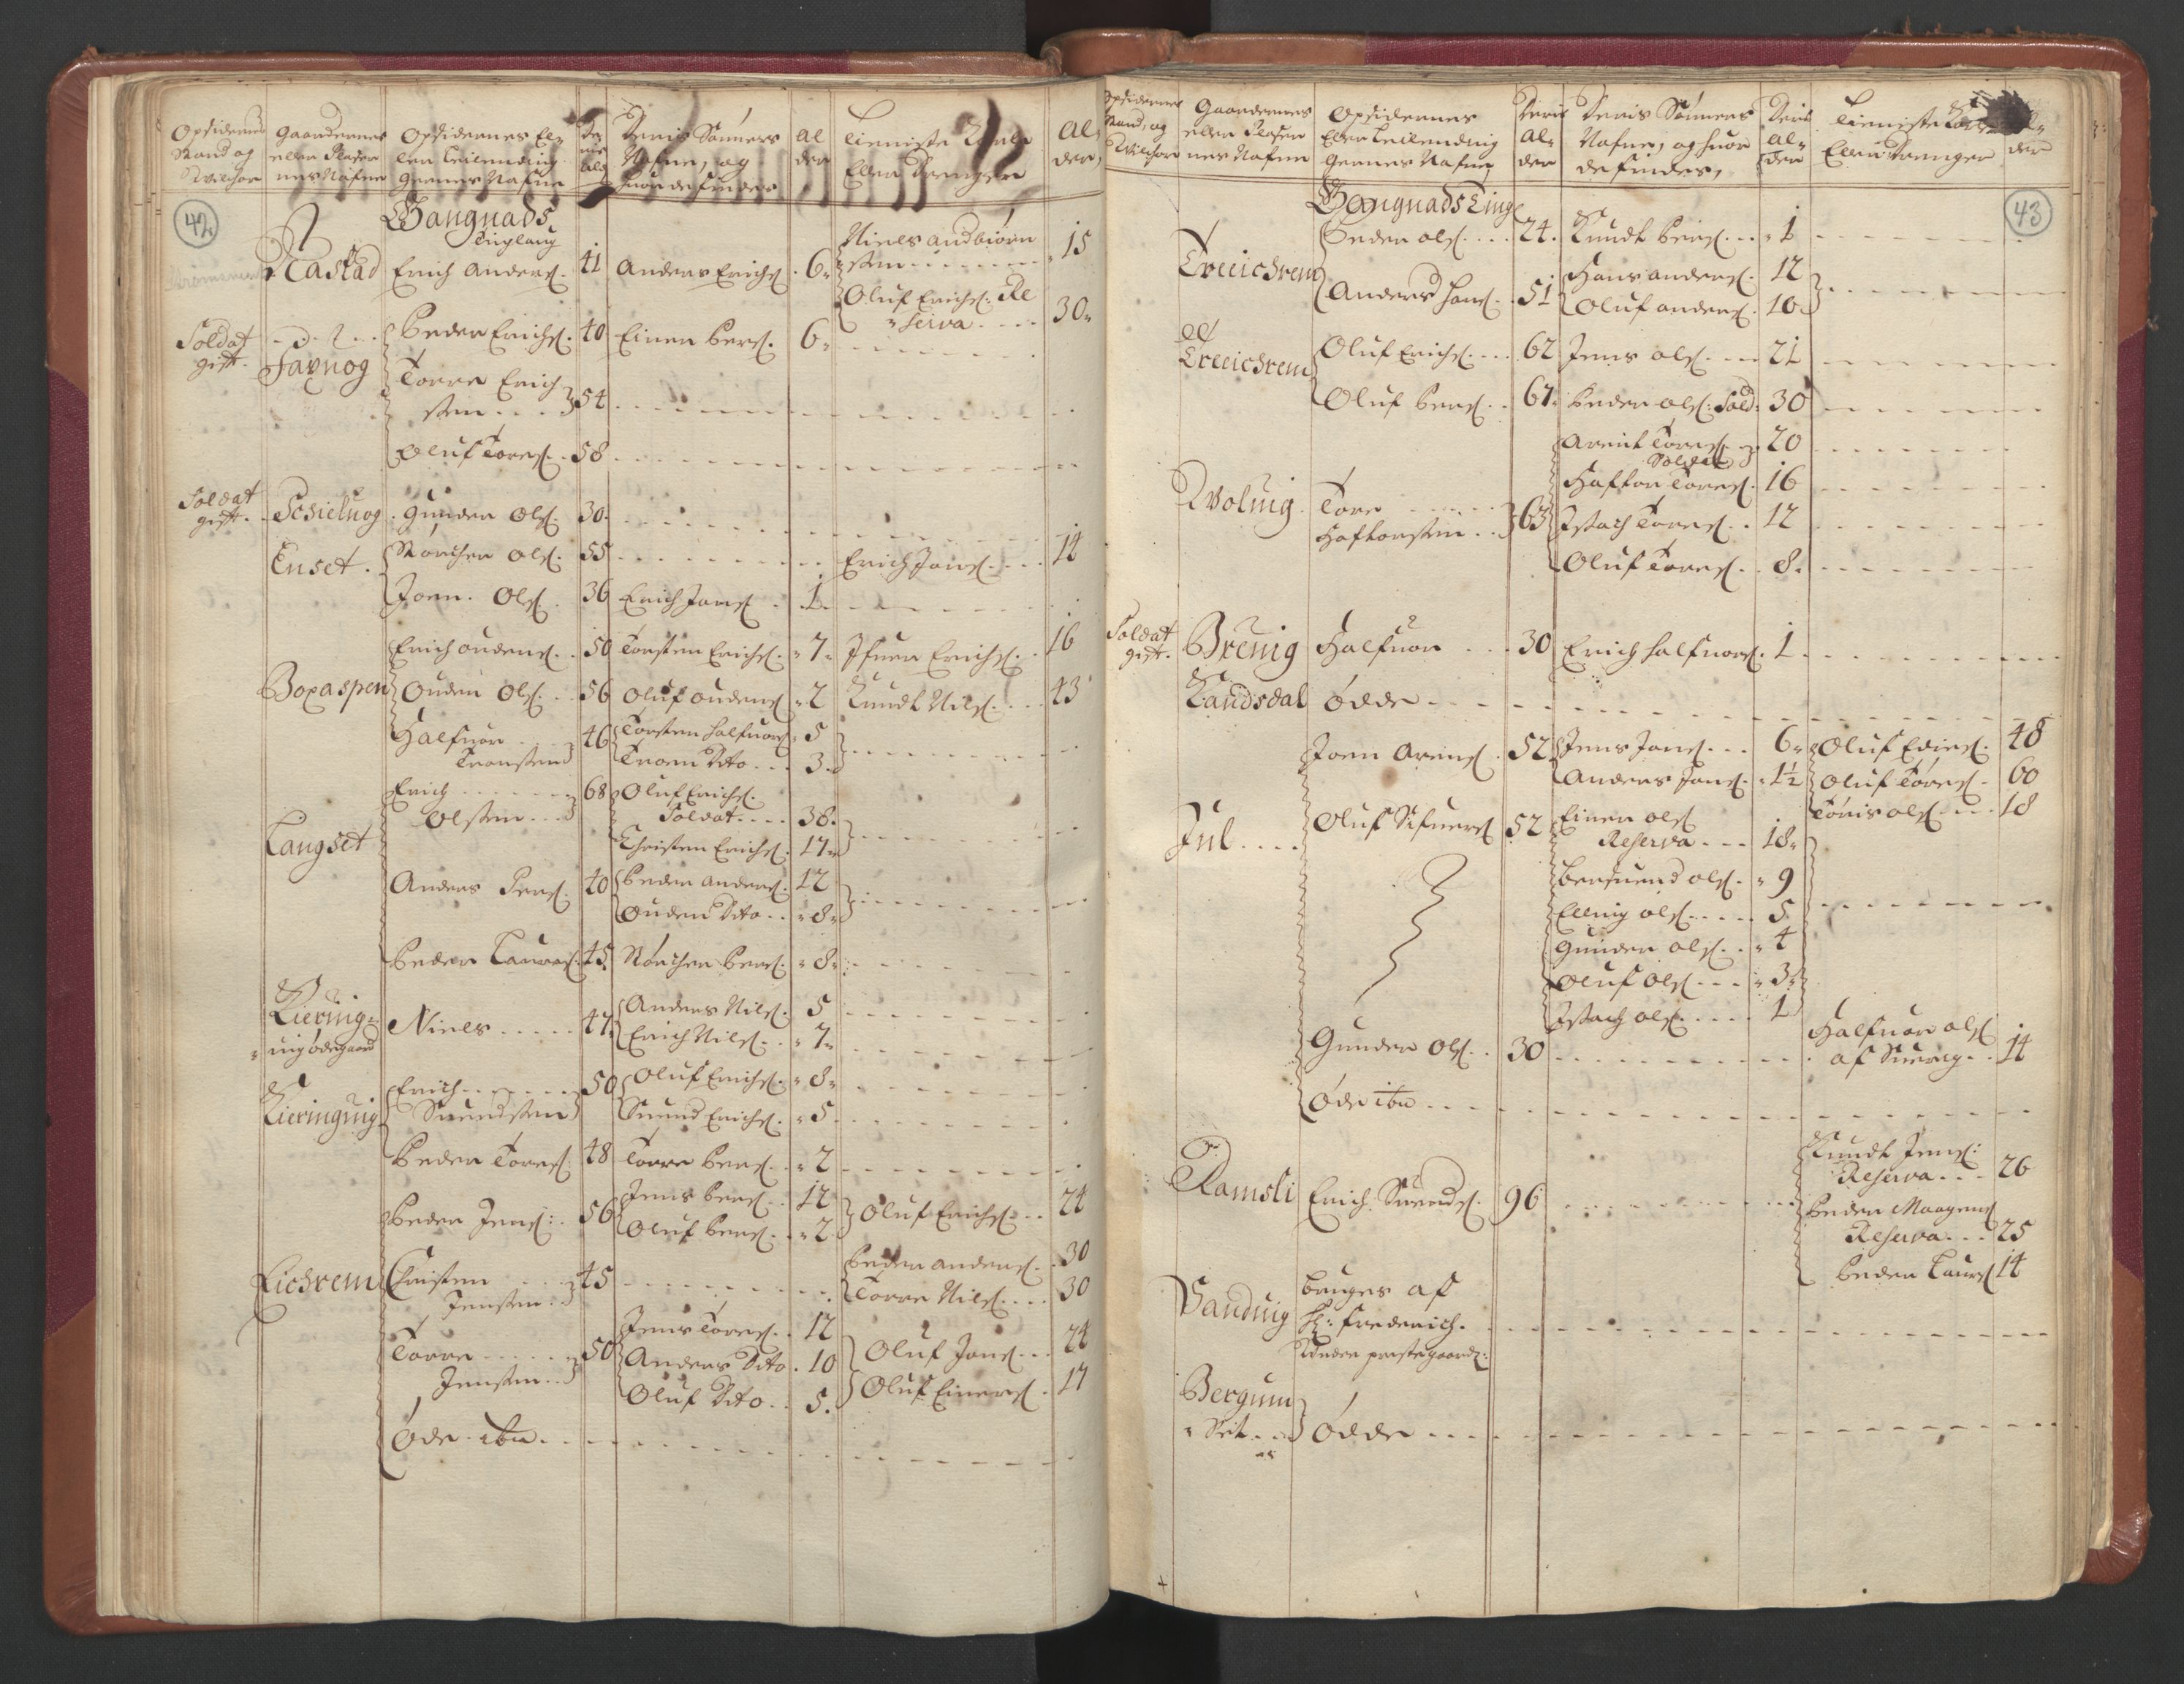 RA, Census (manntall) 1701, no. 11: Nordmøre fogderi and Romsdal fogderi, 1701, p. 42-43